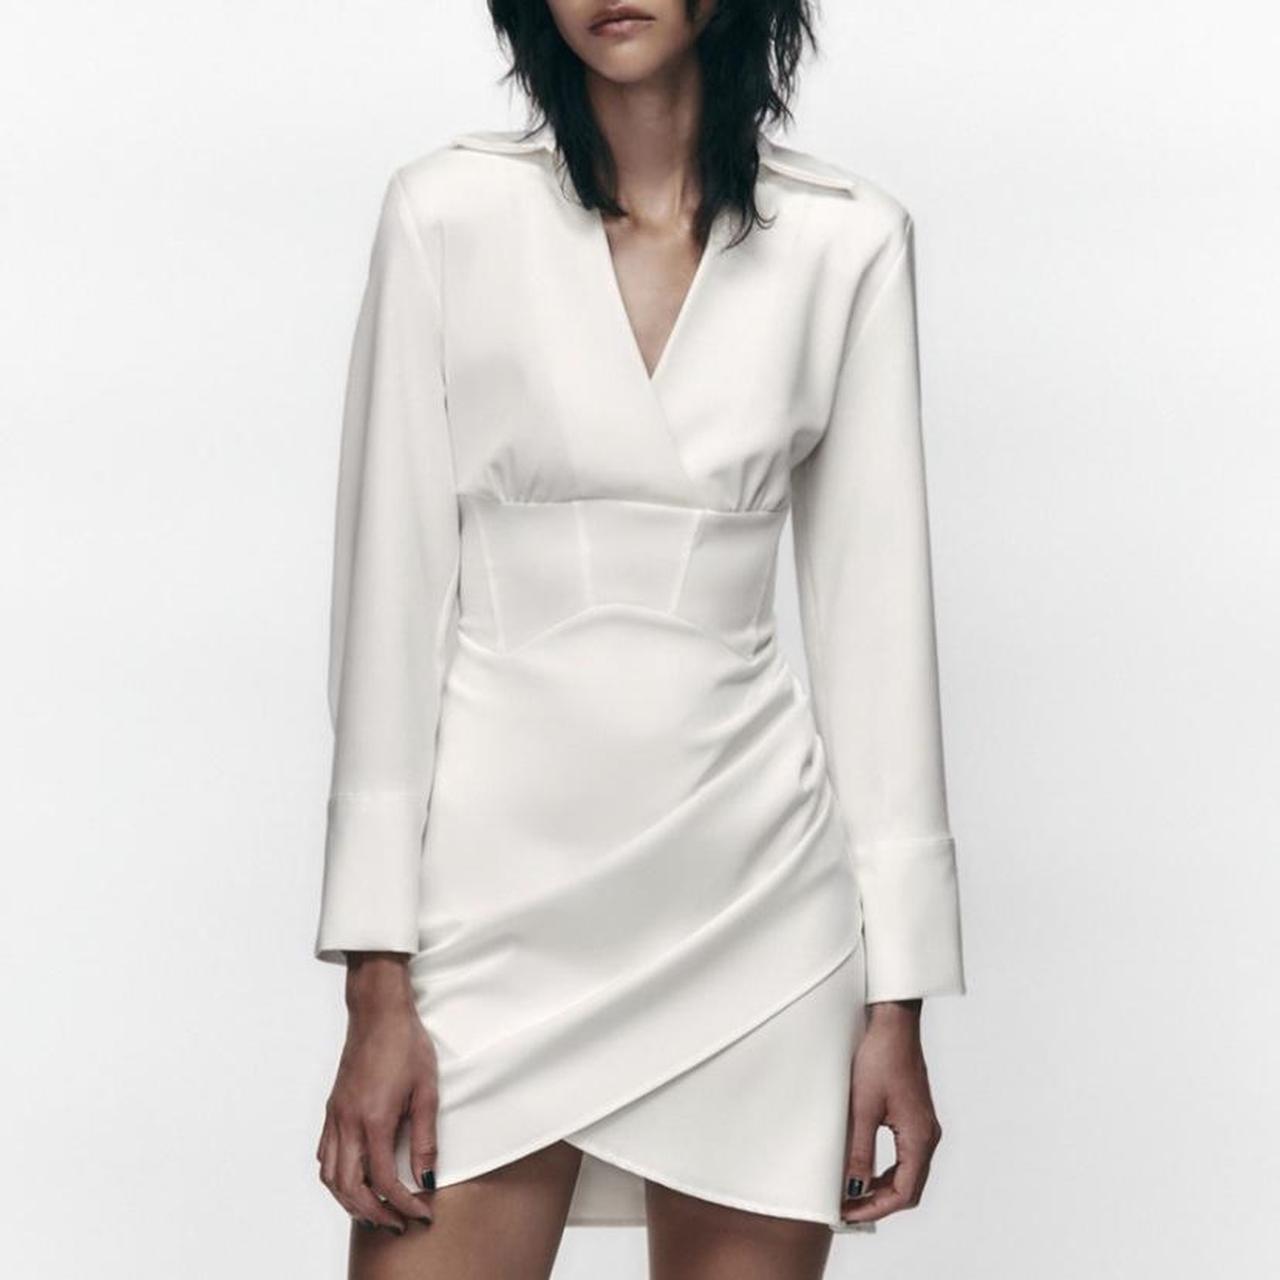 Zara white satin corset dress size small new with tags